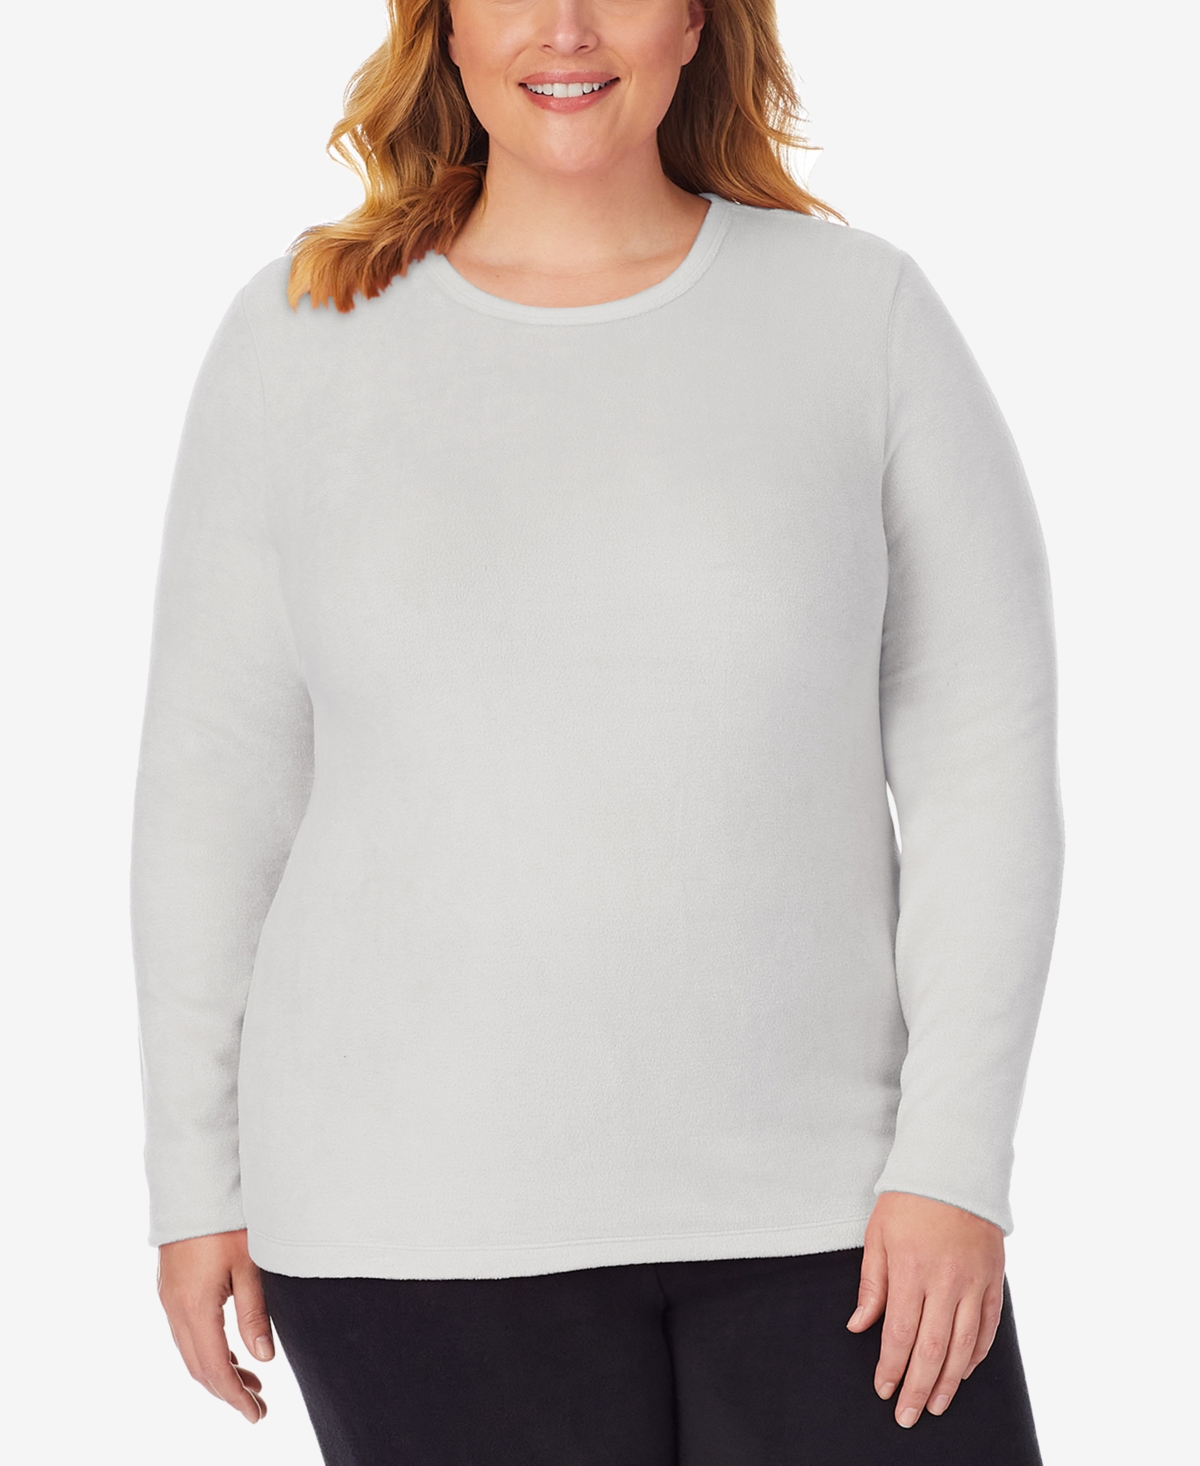 Plus Size Fleecewear With Stretch Long Sleeve Top - Light Grey Heather